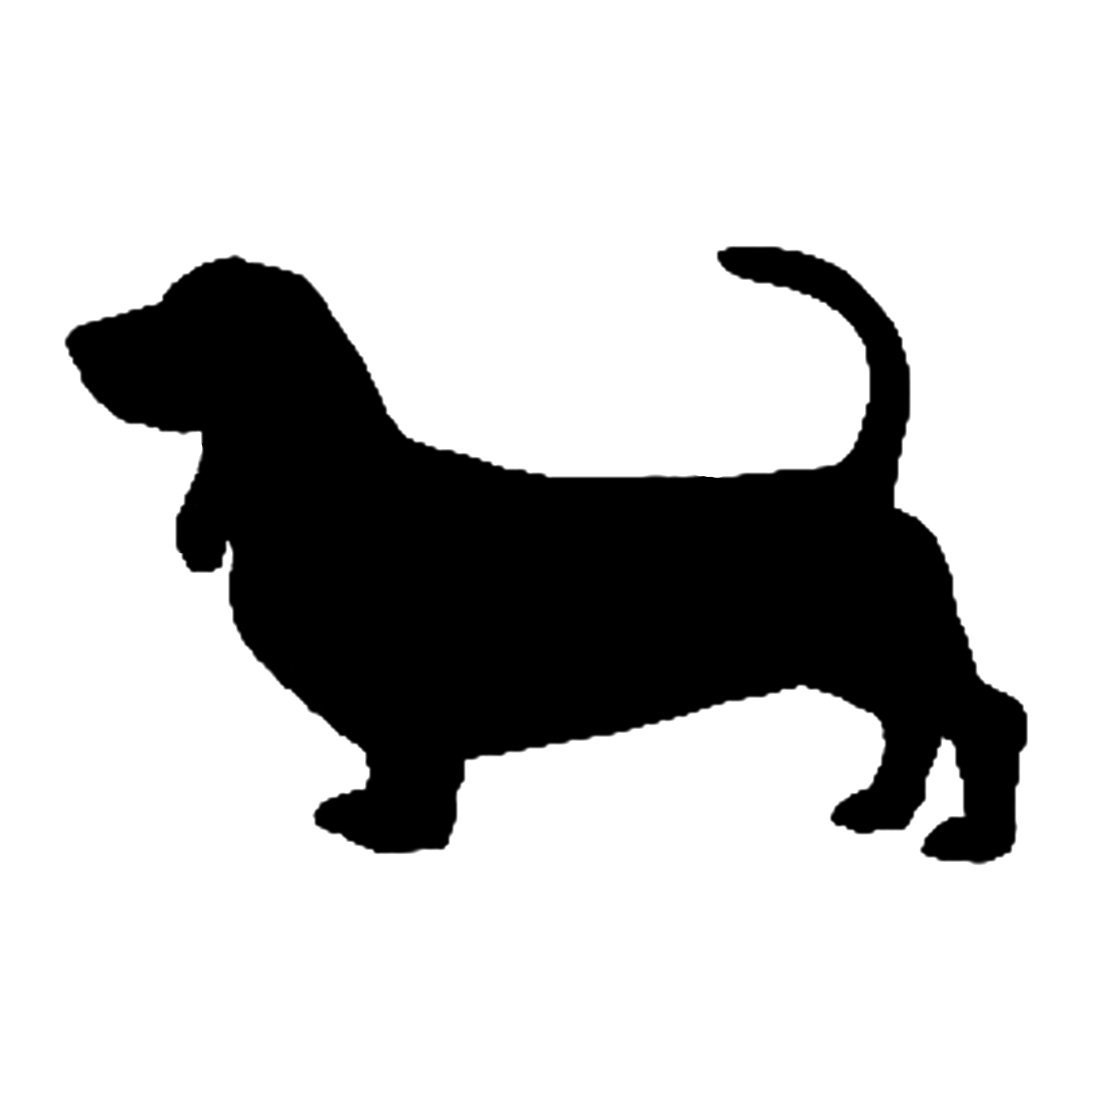 dachshund dog clipart - photo #47